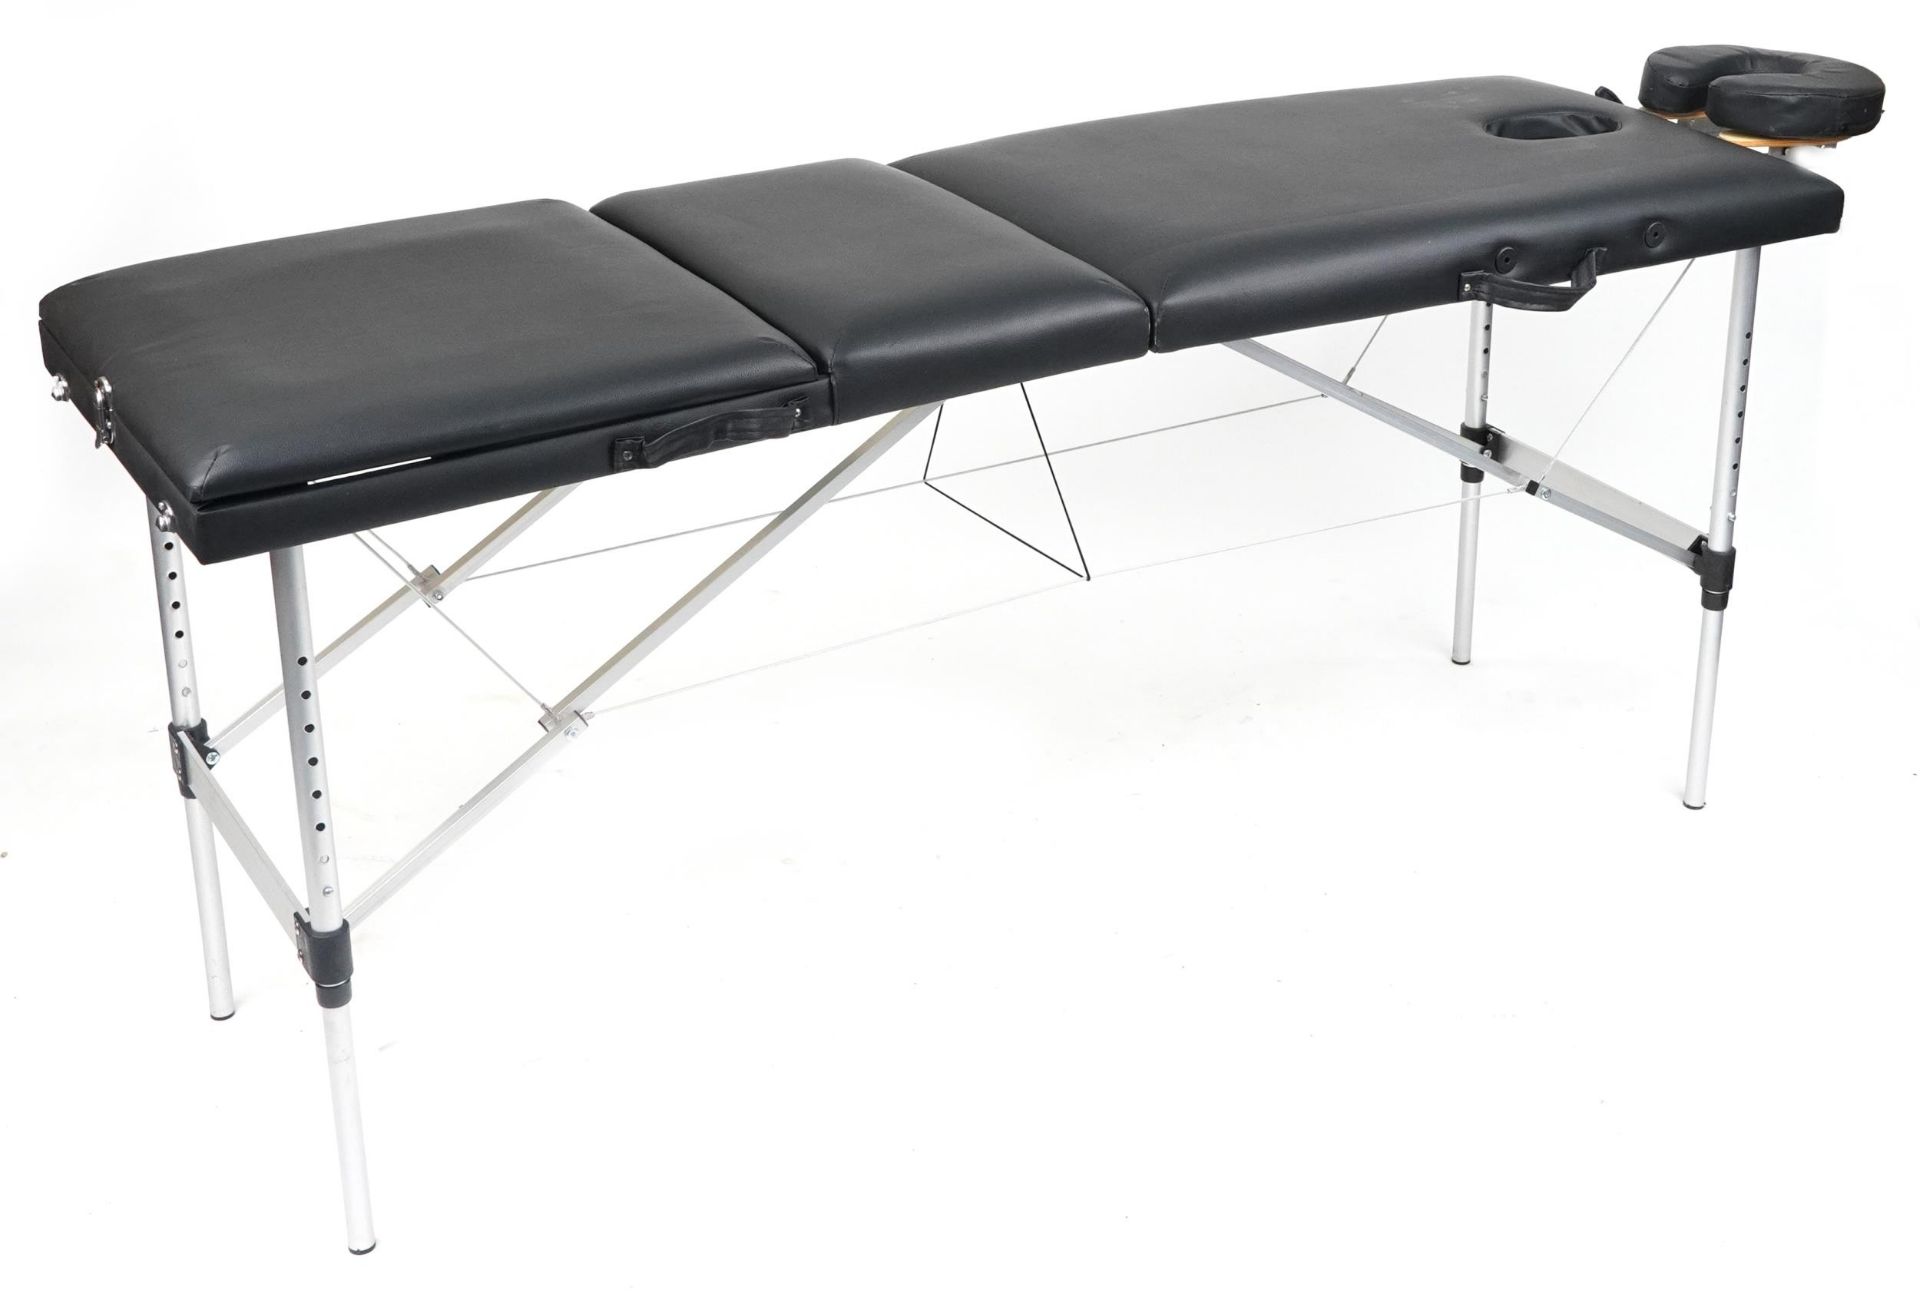 Folding aluminium and black leatherette massage table with protective bag, 83cm H x 184cm W x 59cm D